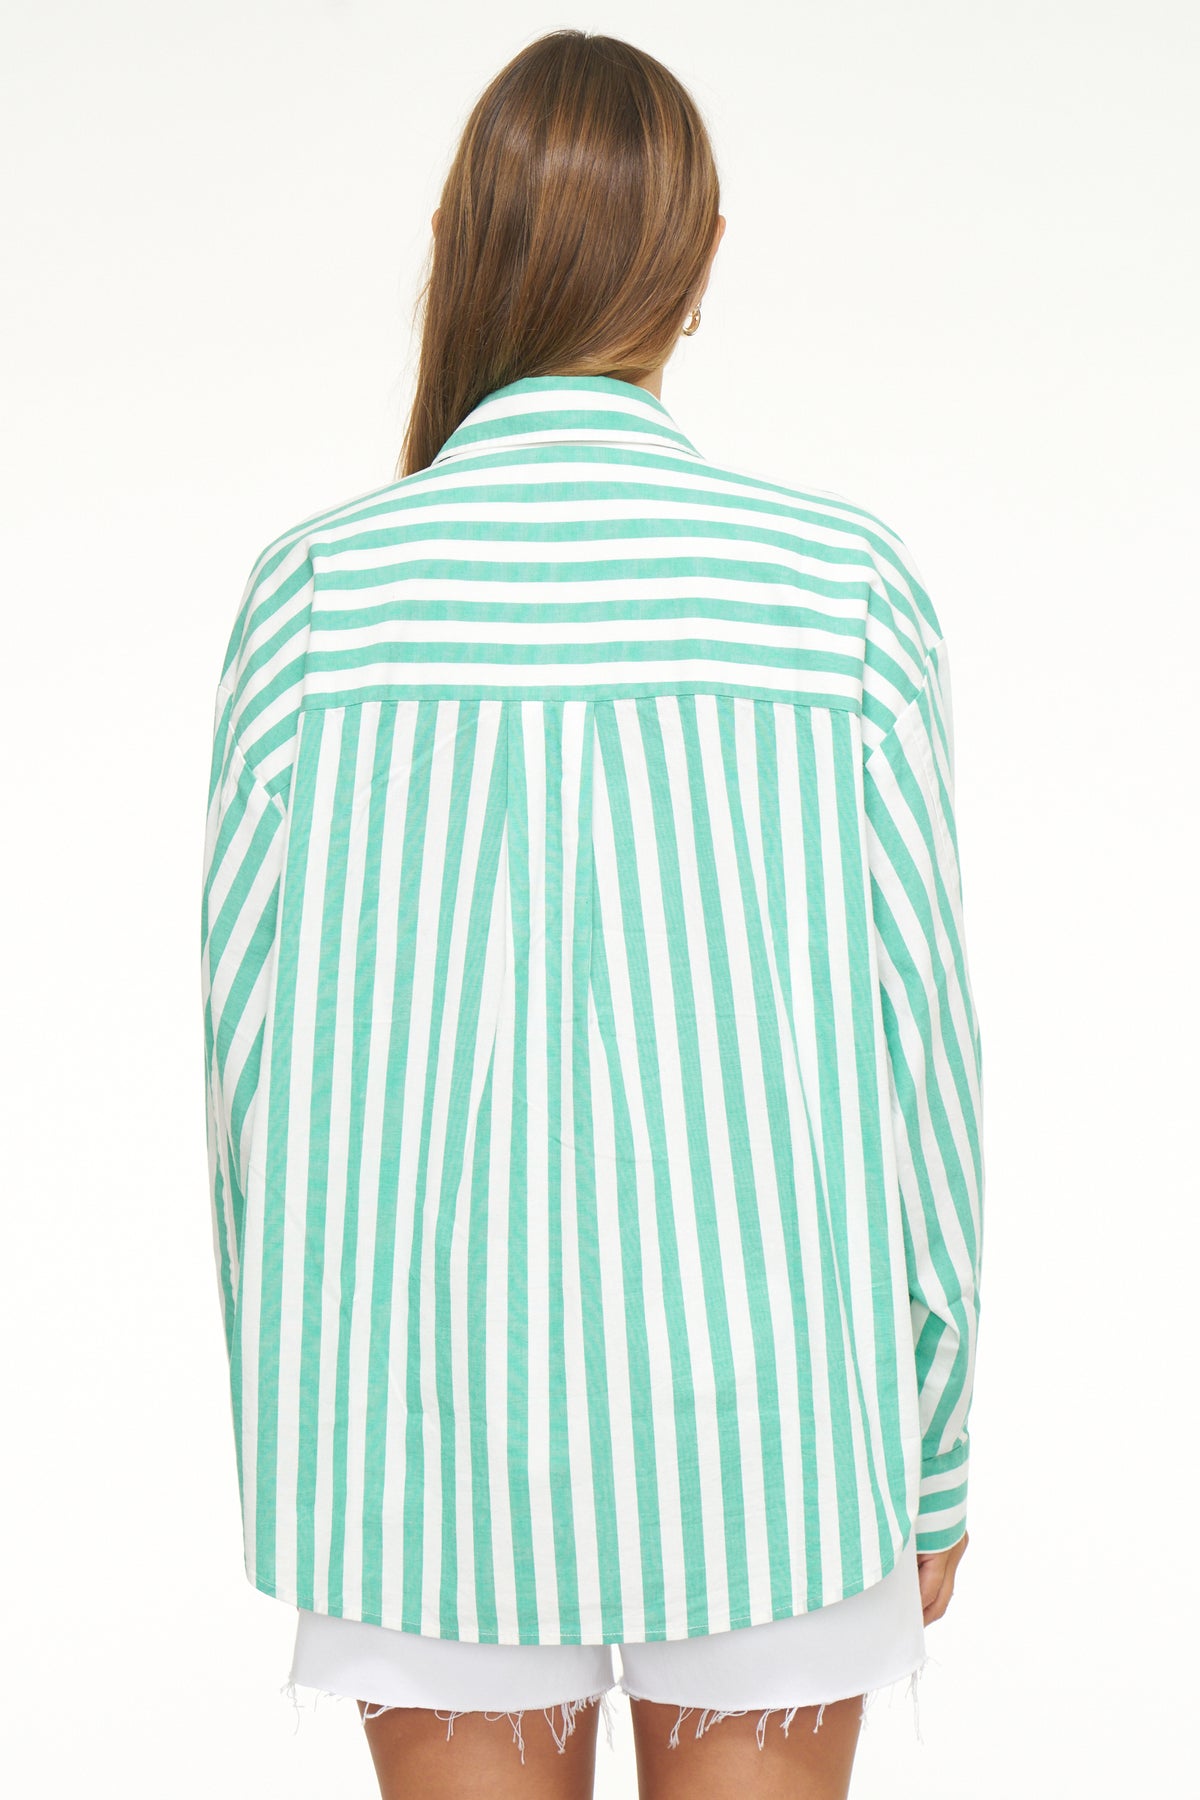 Sloane Oversized Button Down Shirt - Clover Stripe